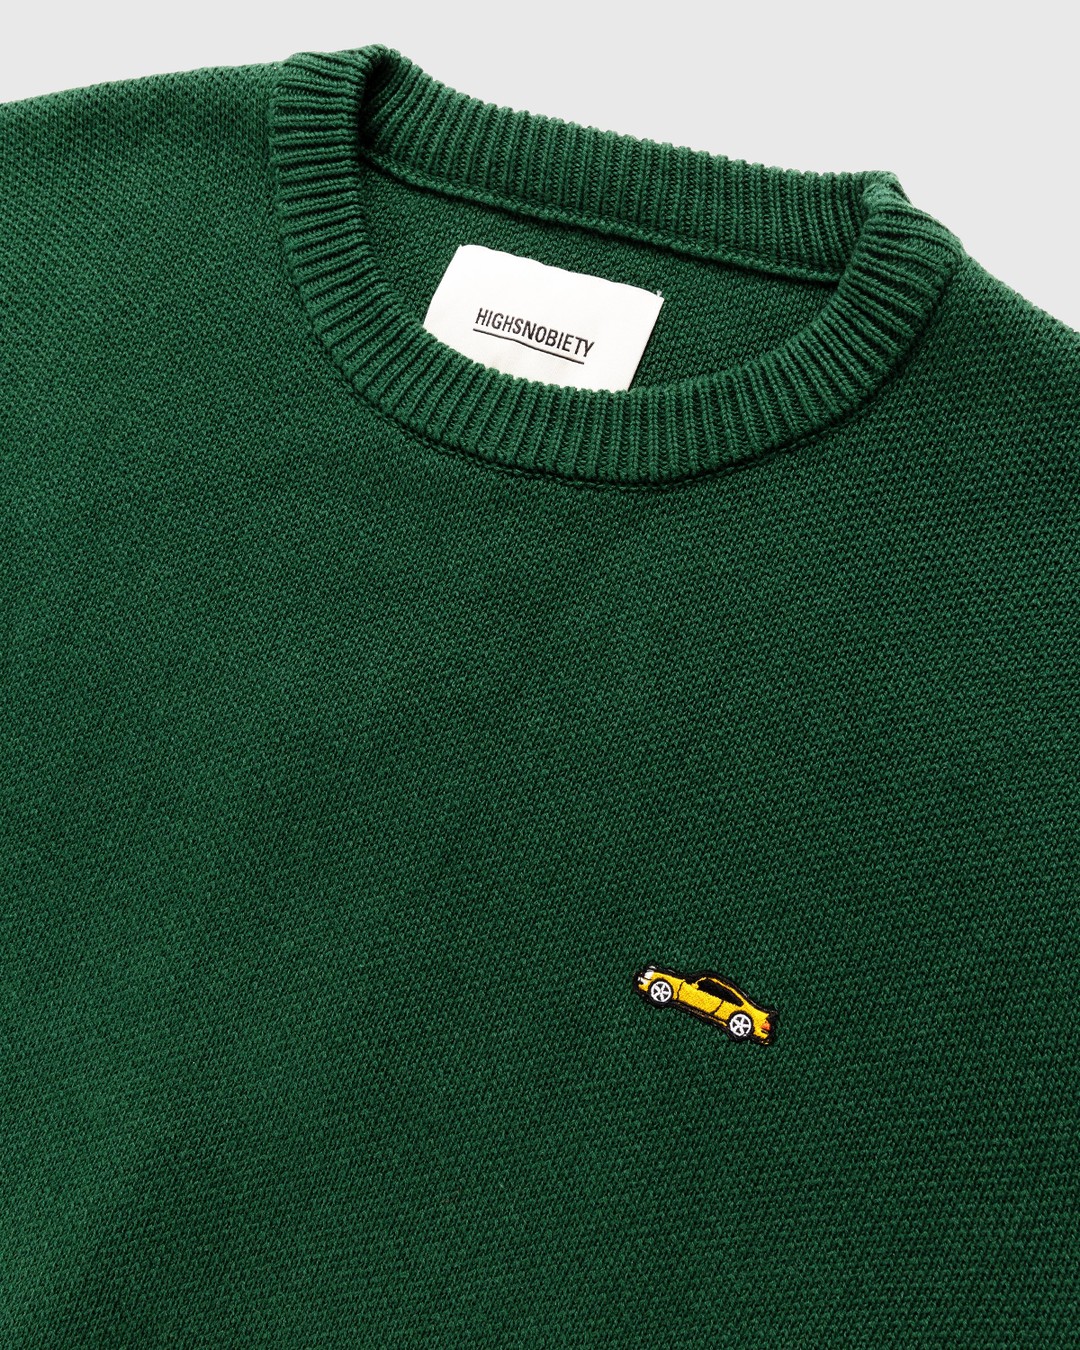 RUF x Highsnobiety – Knitted Crewneck Sweater Green - Crewnecks - Green - Image 5